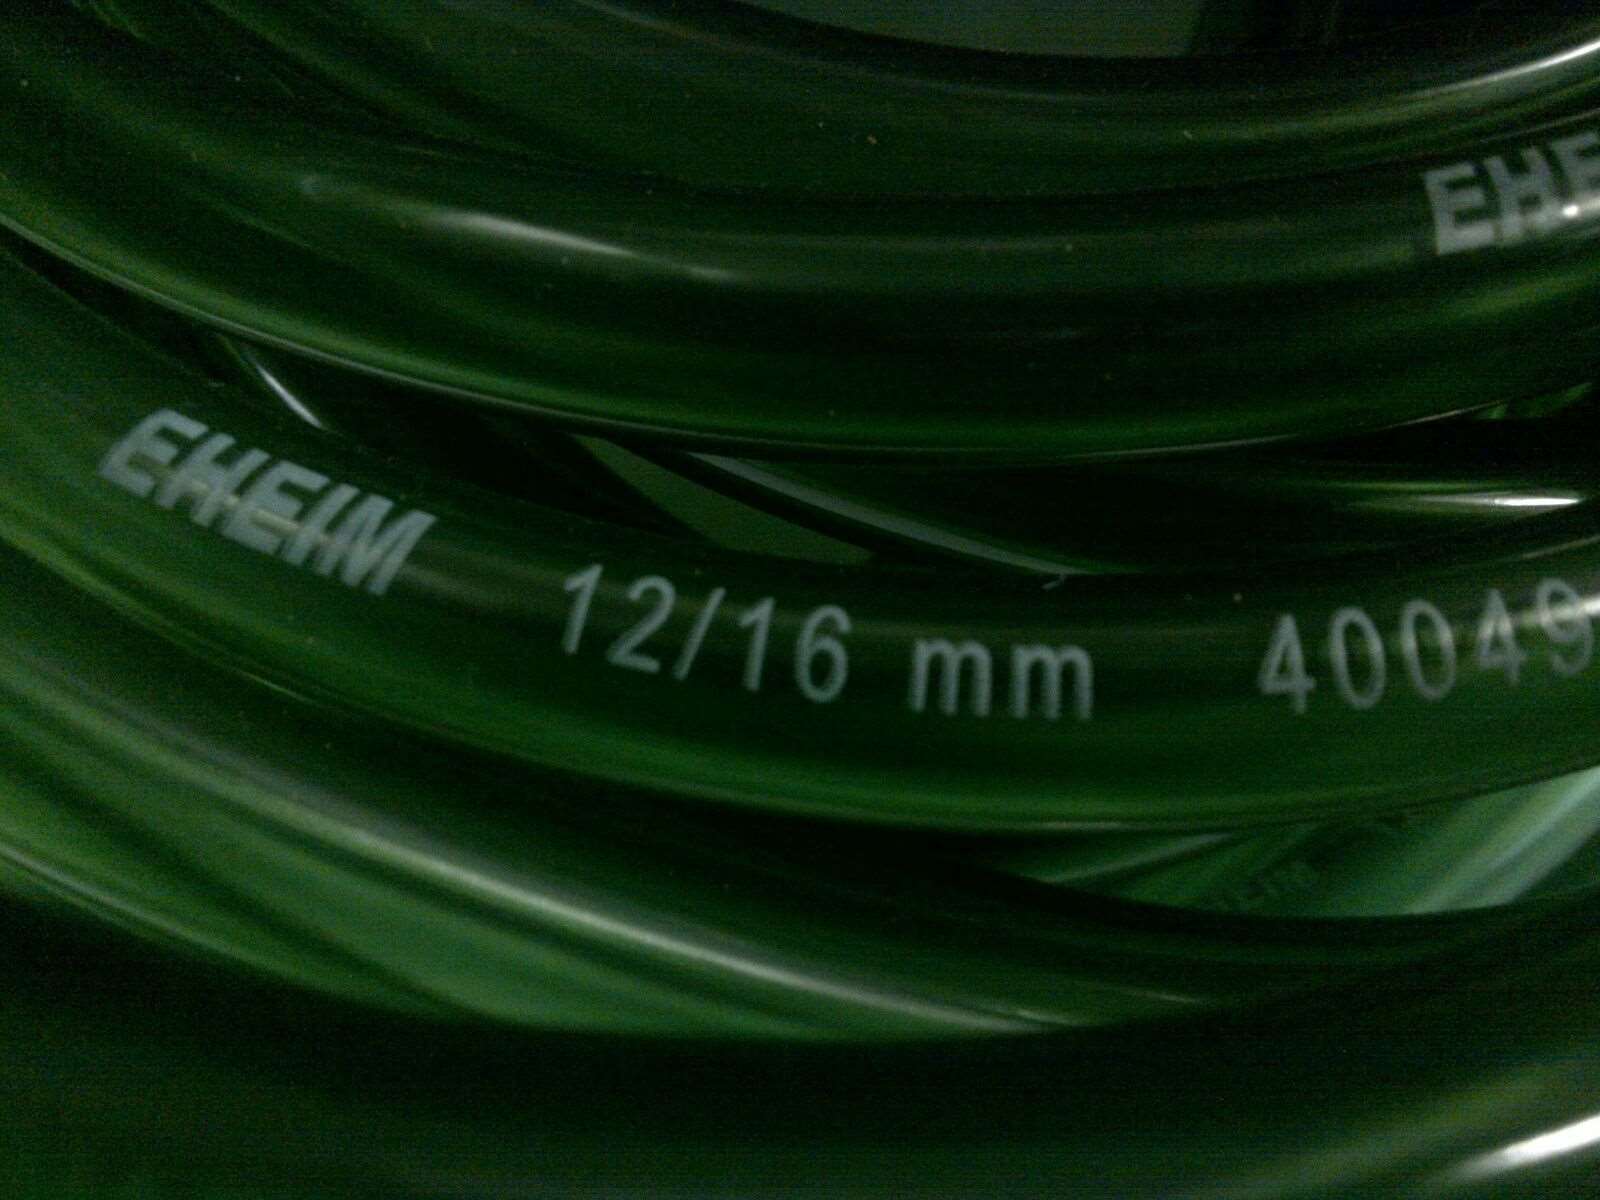 New Eheim 12/16 hoses 3 metres